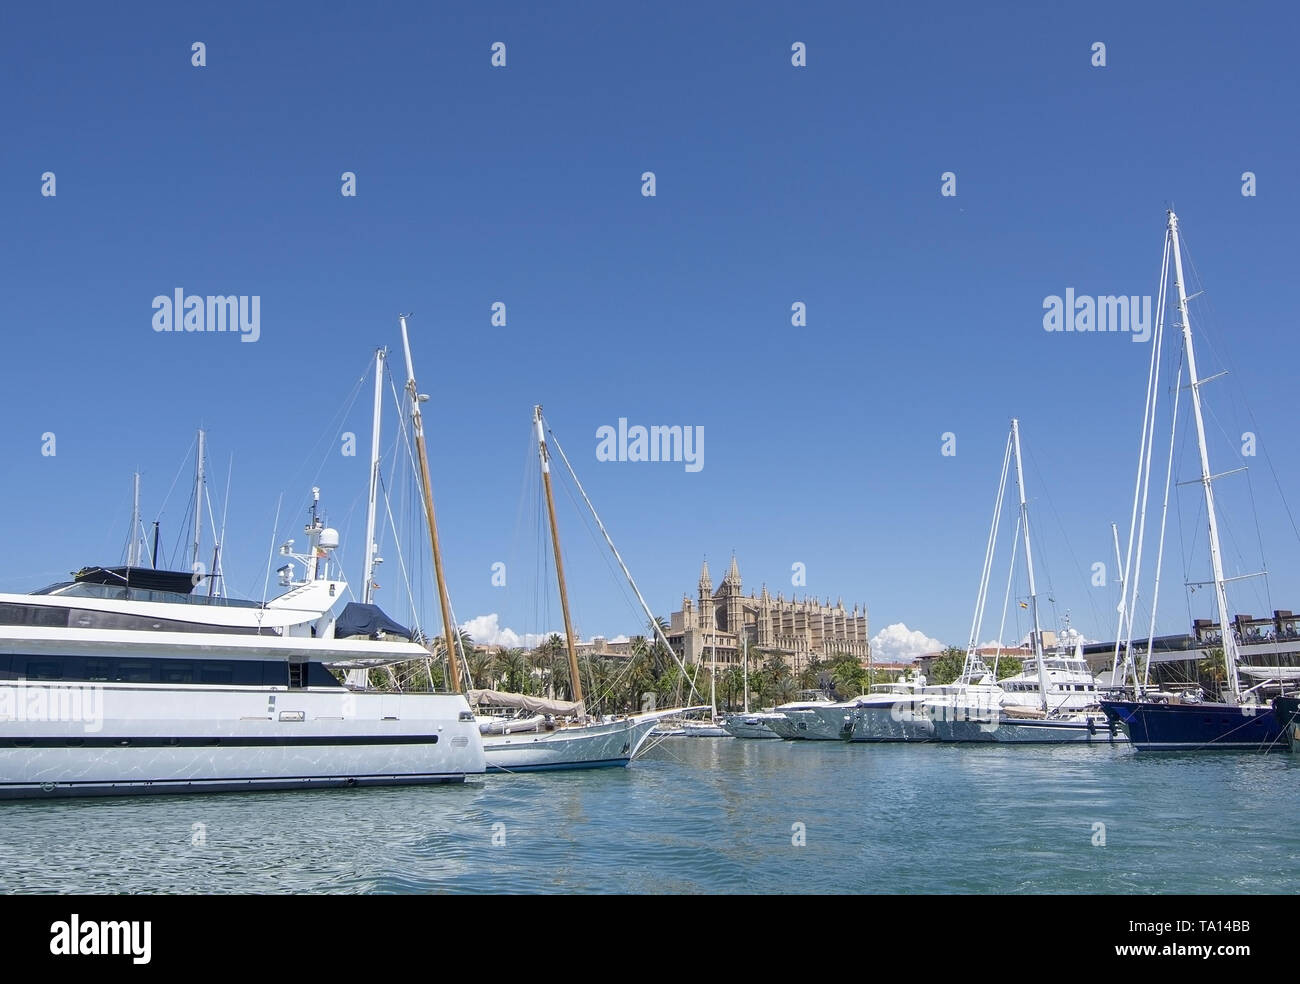 PALMA, MALLORCA, SPAIN - MAY 20, 2019: Palma port boat tour views on a sunny day on May 20, 2019 in Palma, Mallorca, Spain. Stock Photo